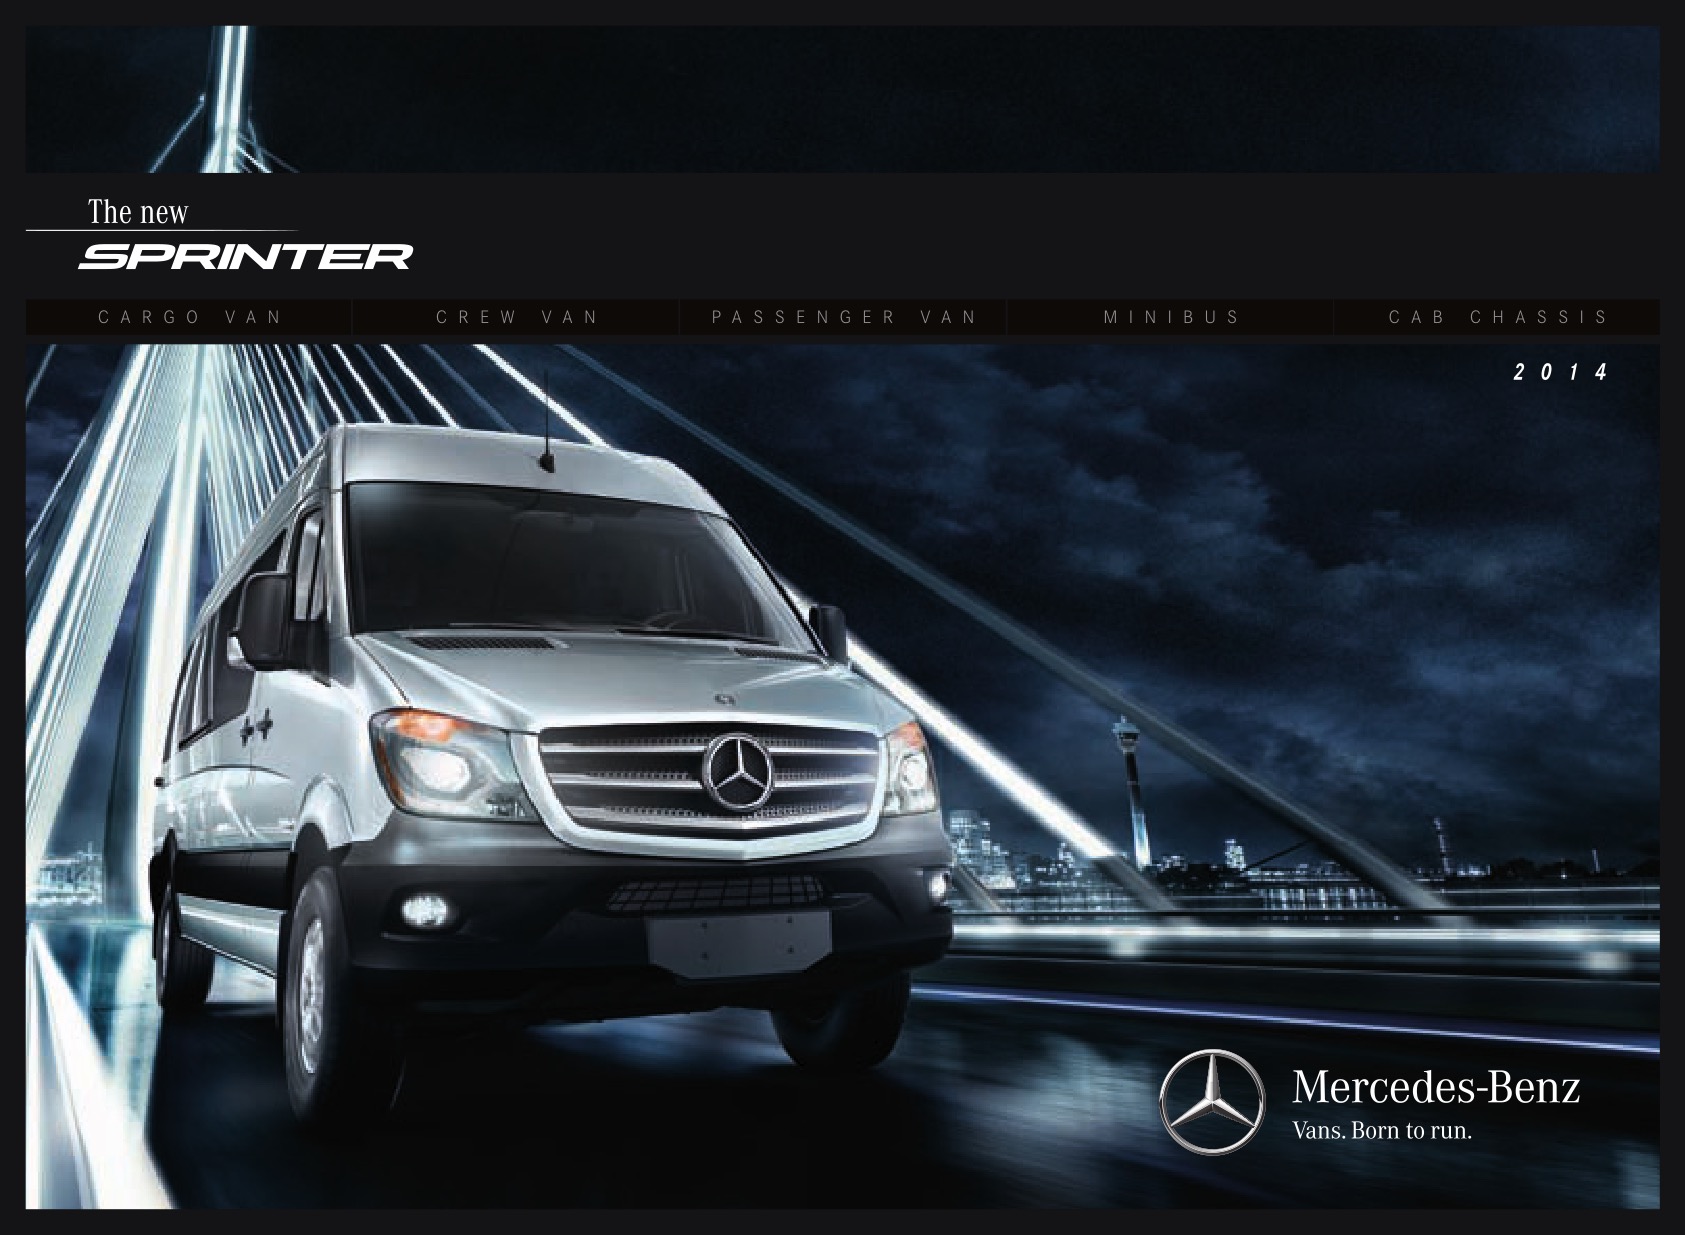 2014 Mercedes-Benz Sprinter Brochure Page 17